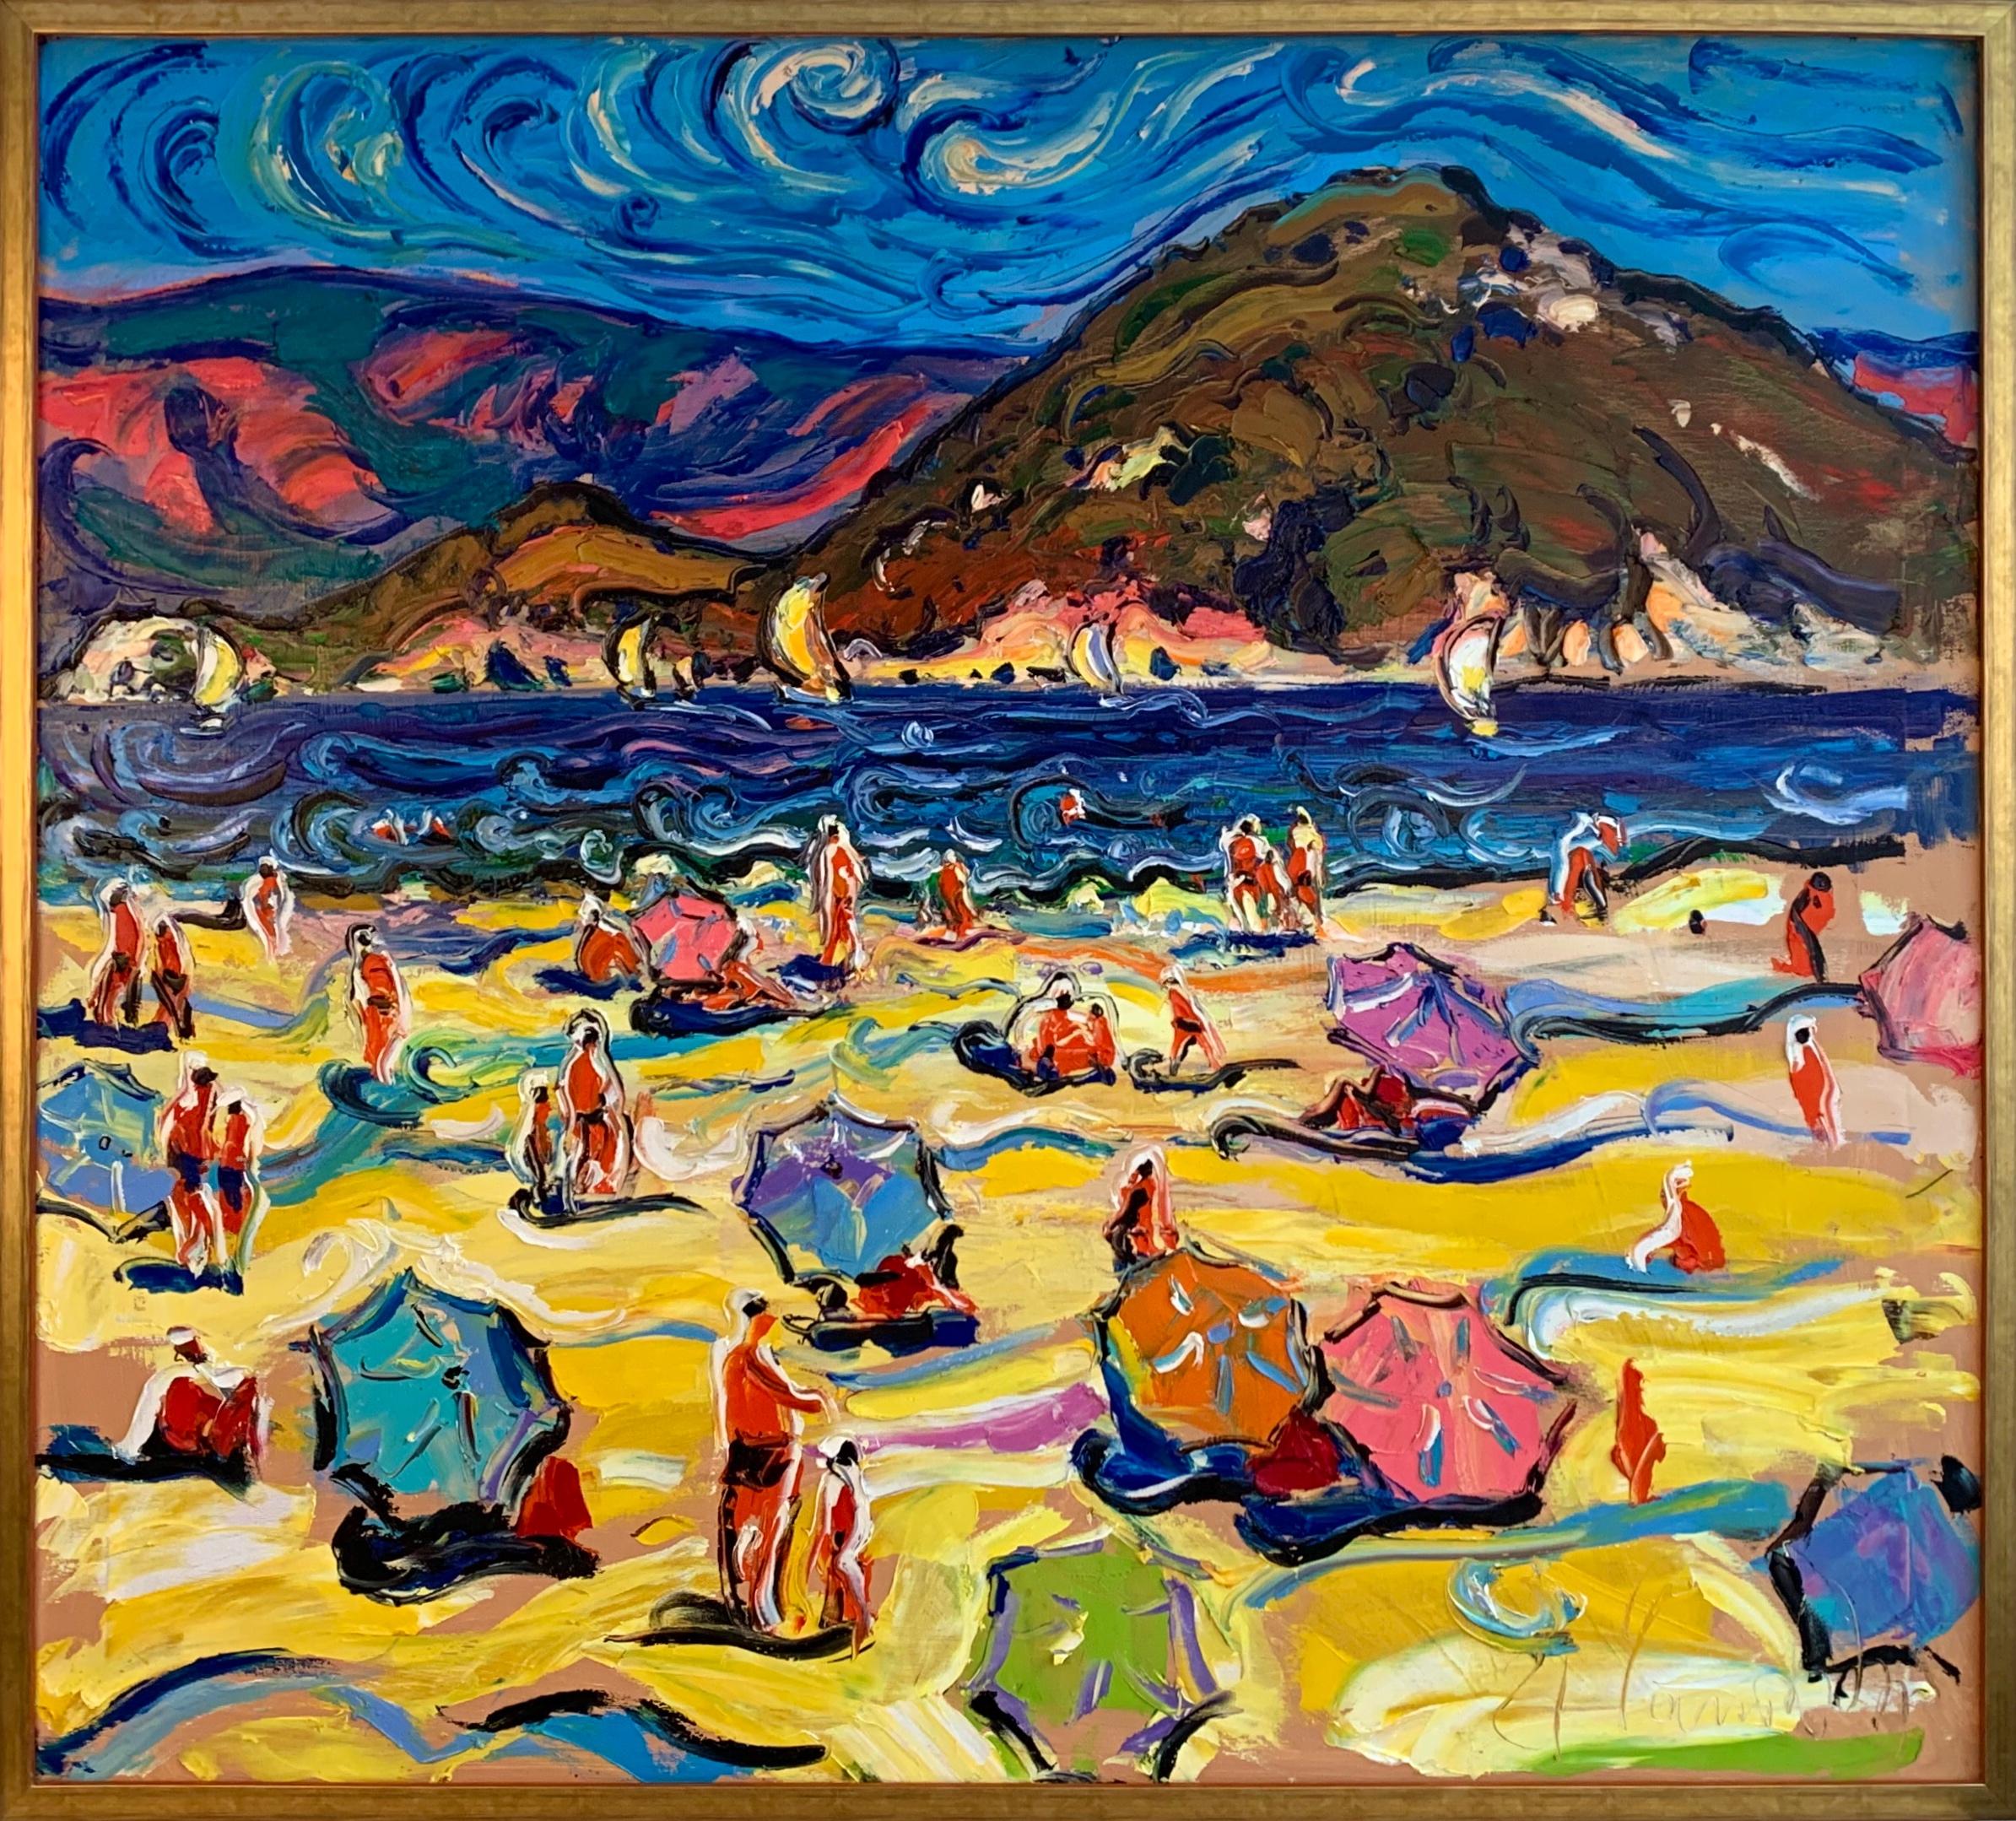 Chebotaru Andrey Landscape Painting - Modern Art Beach Landscape Oil Canvas Framed Seaside Painting by Chebotaru A.